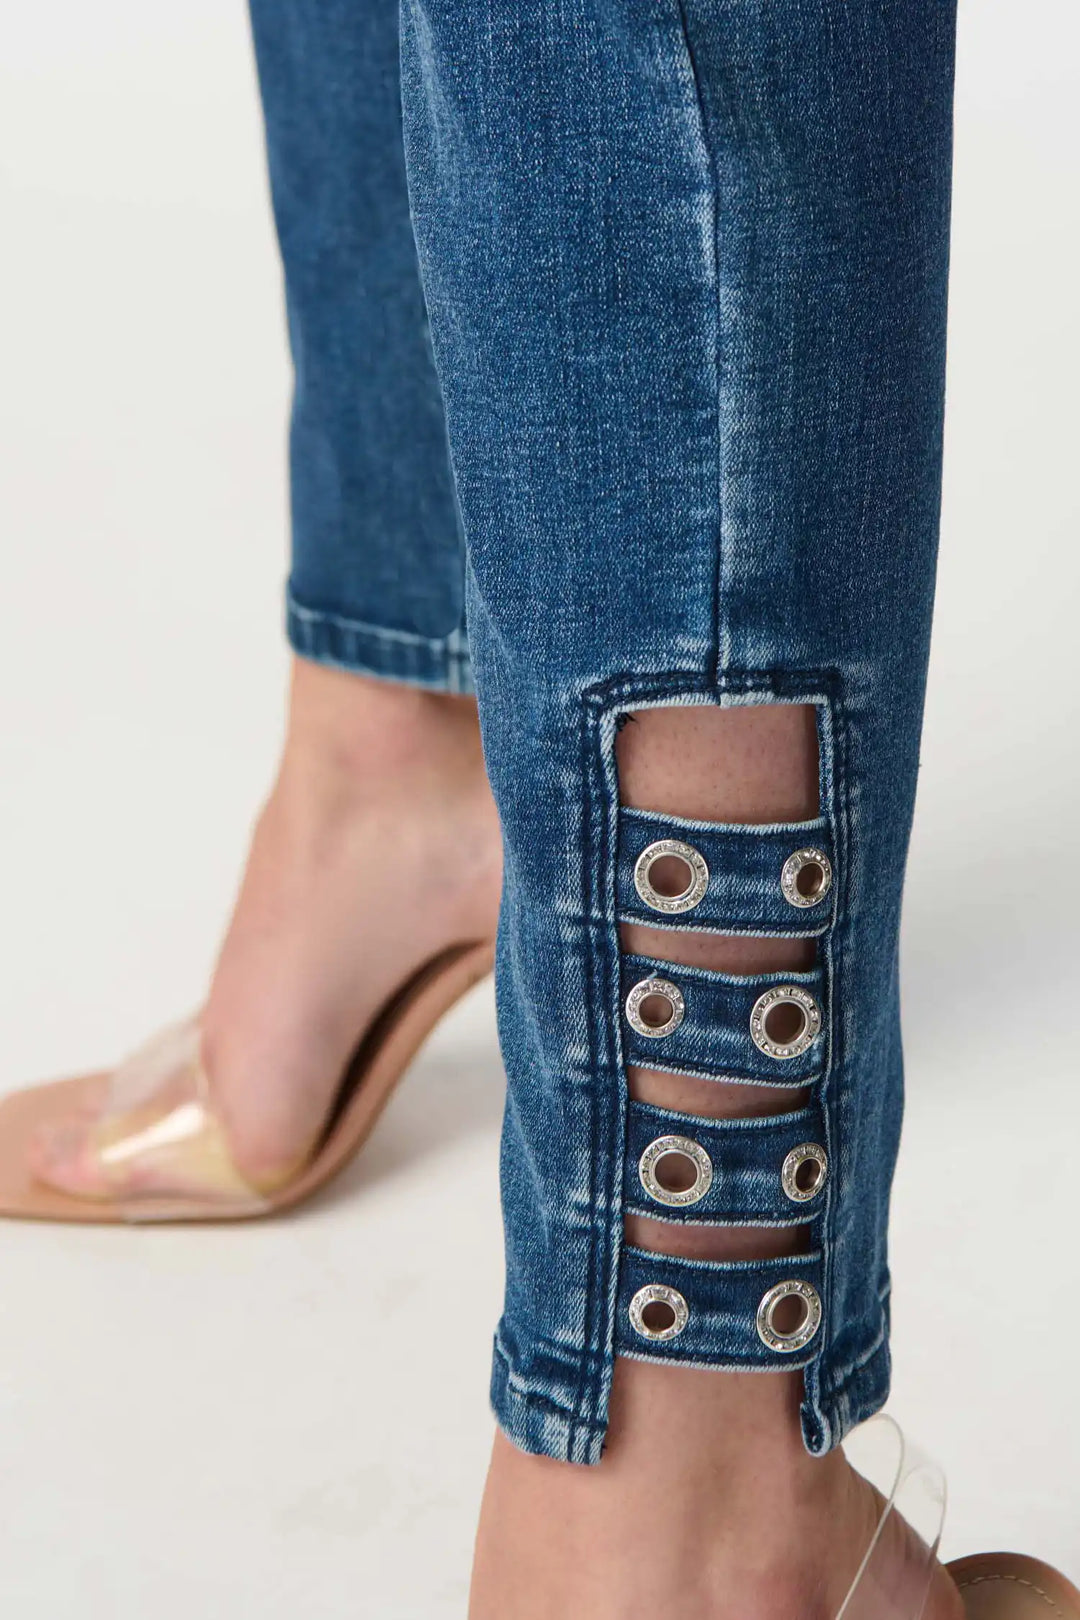 "Joseph Ribkoff Medium Blue Classic Slim Jeans with Embellished Hem Style 241900"